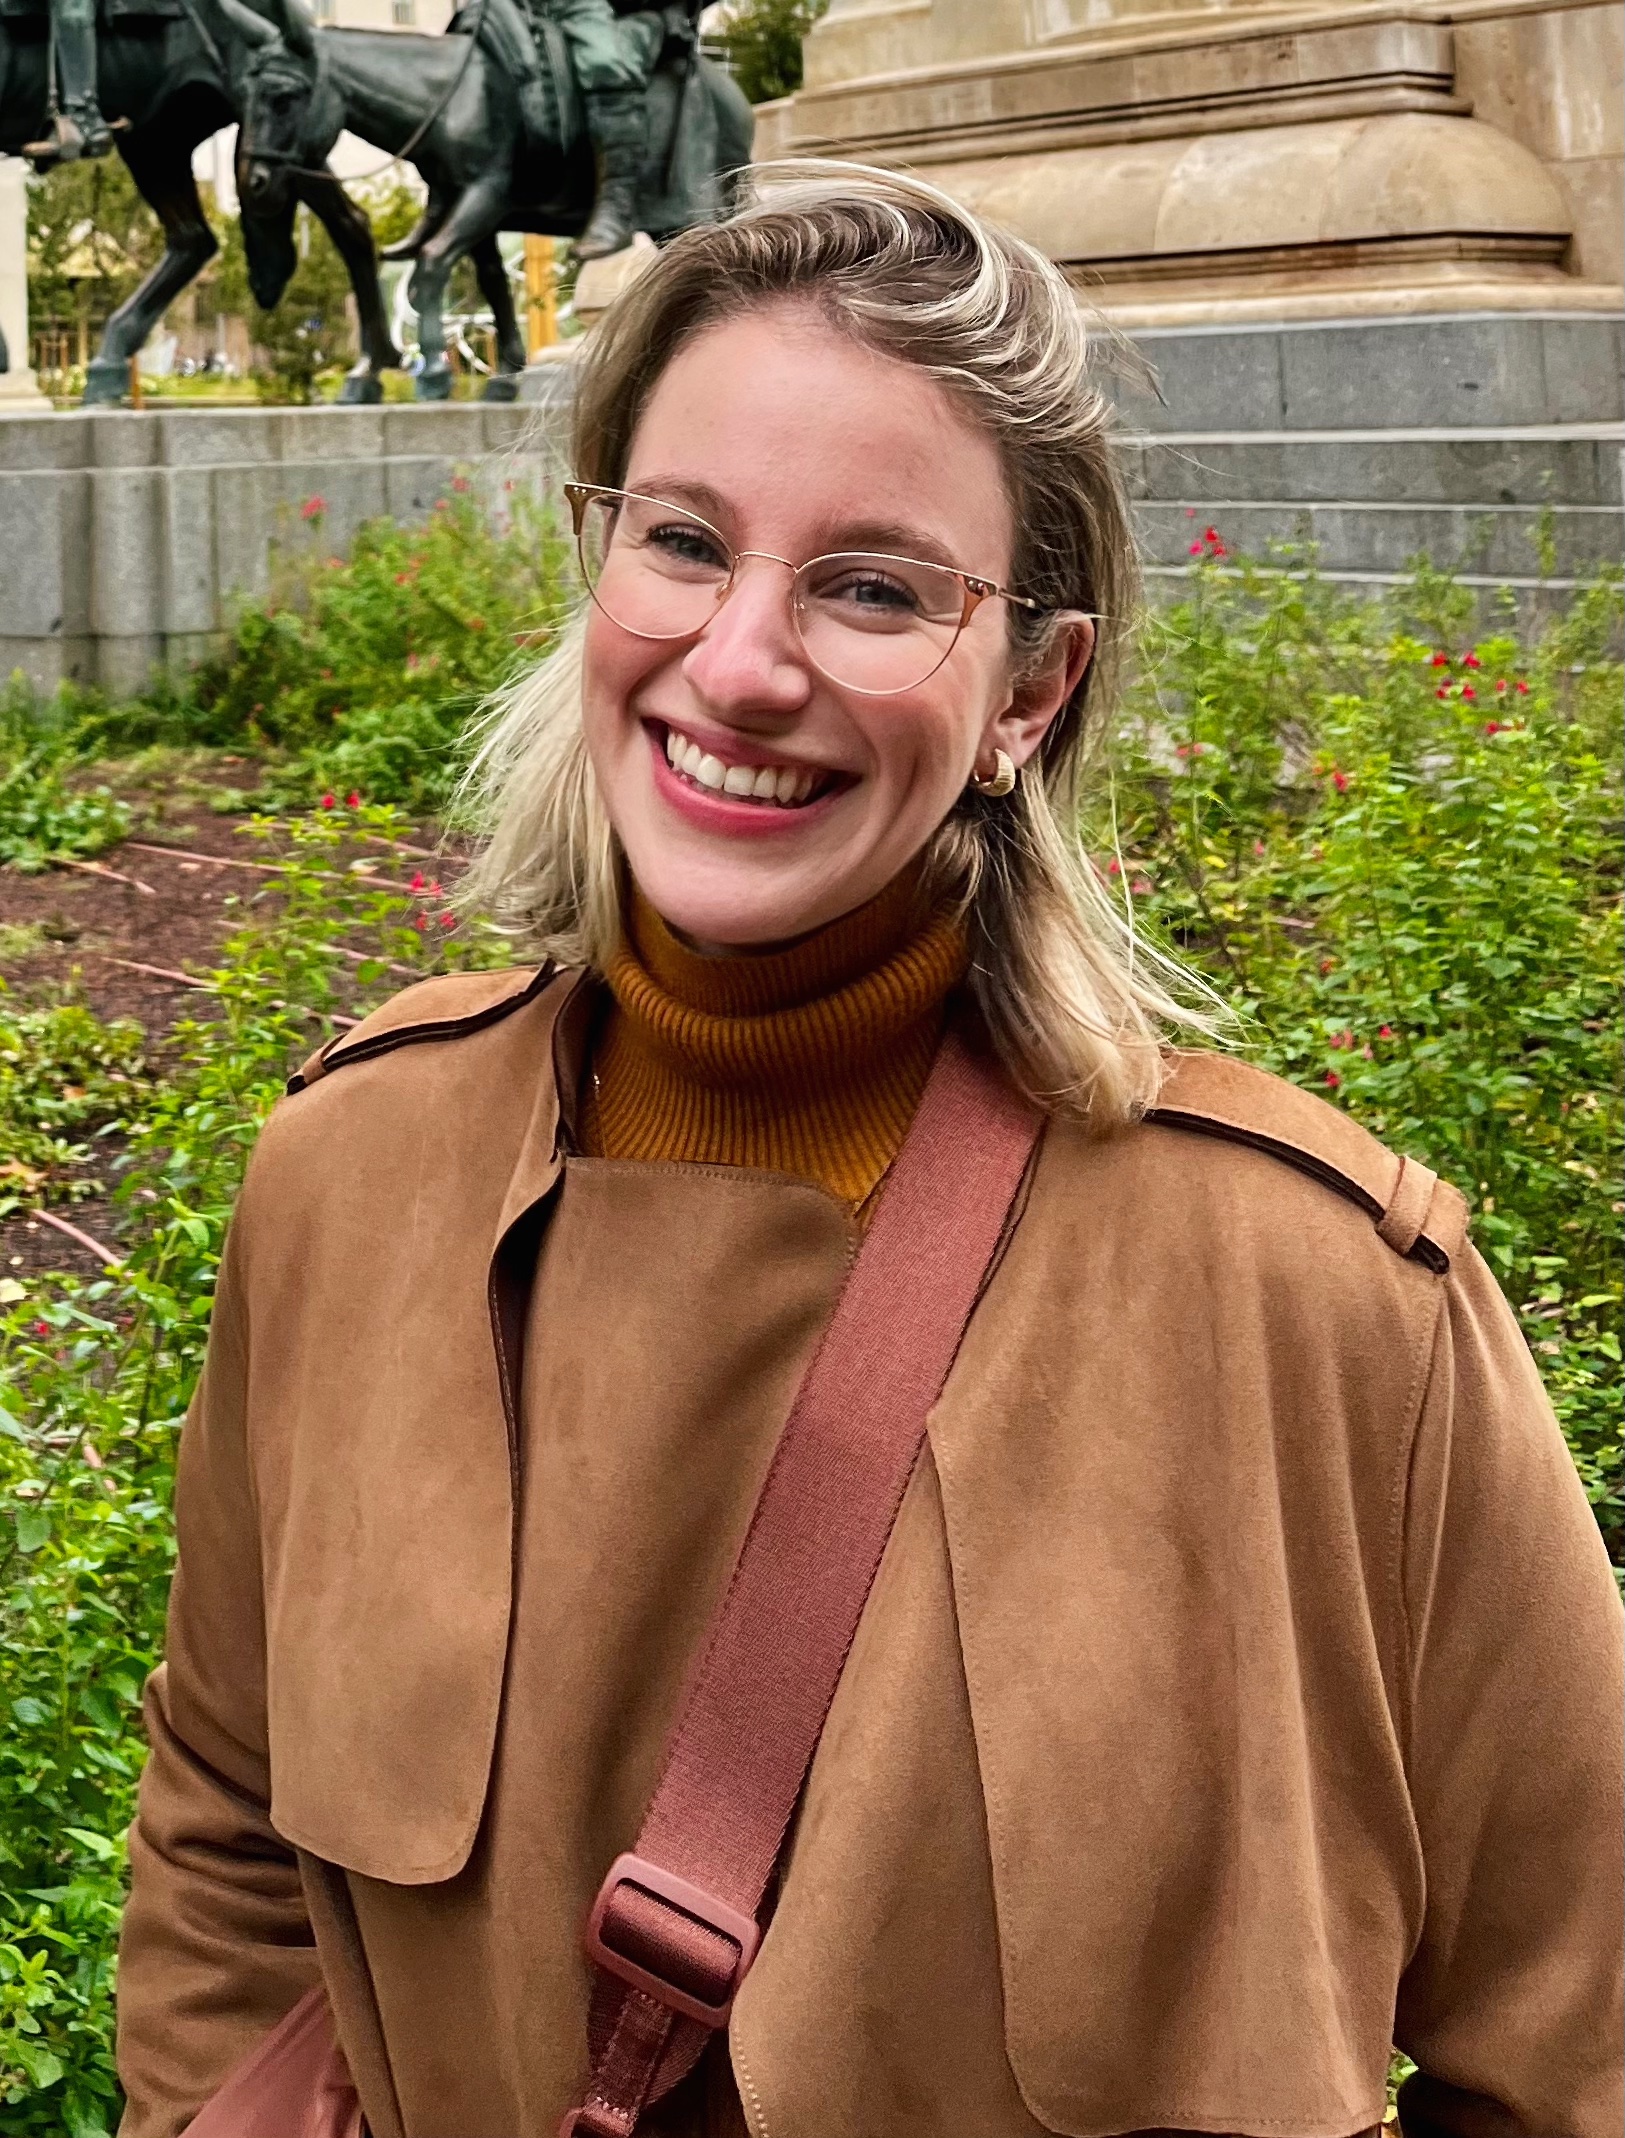 Taylor Dysart in tan suede coat, near statues